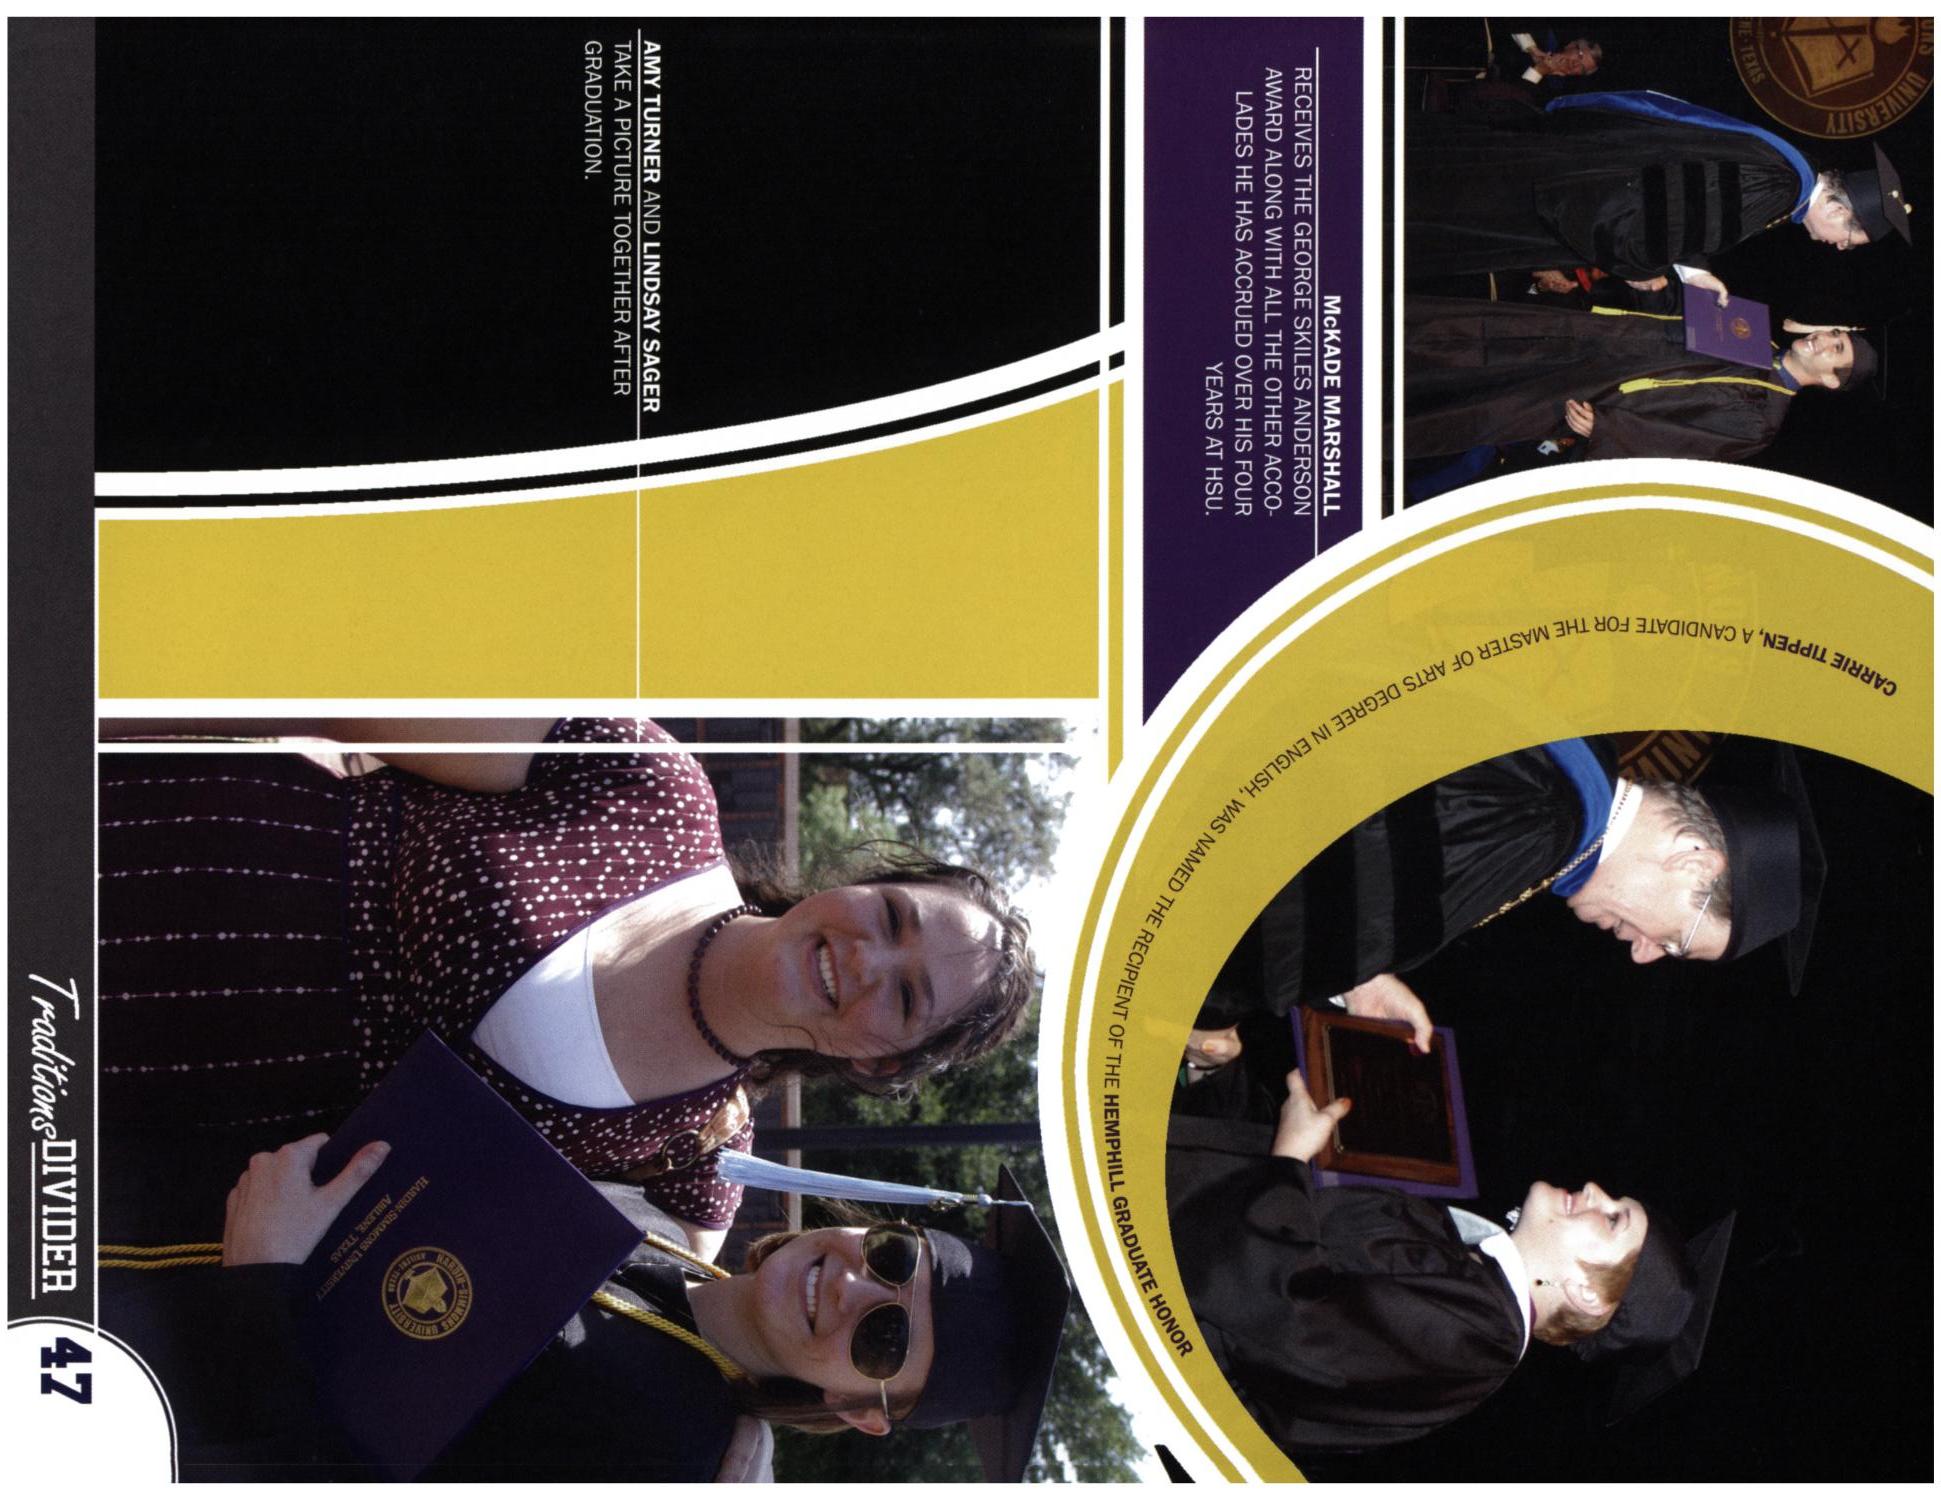 The Bronco, Yearbook of Hardin-Simmons University, 2008
                                                
                                                    47
                                                